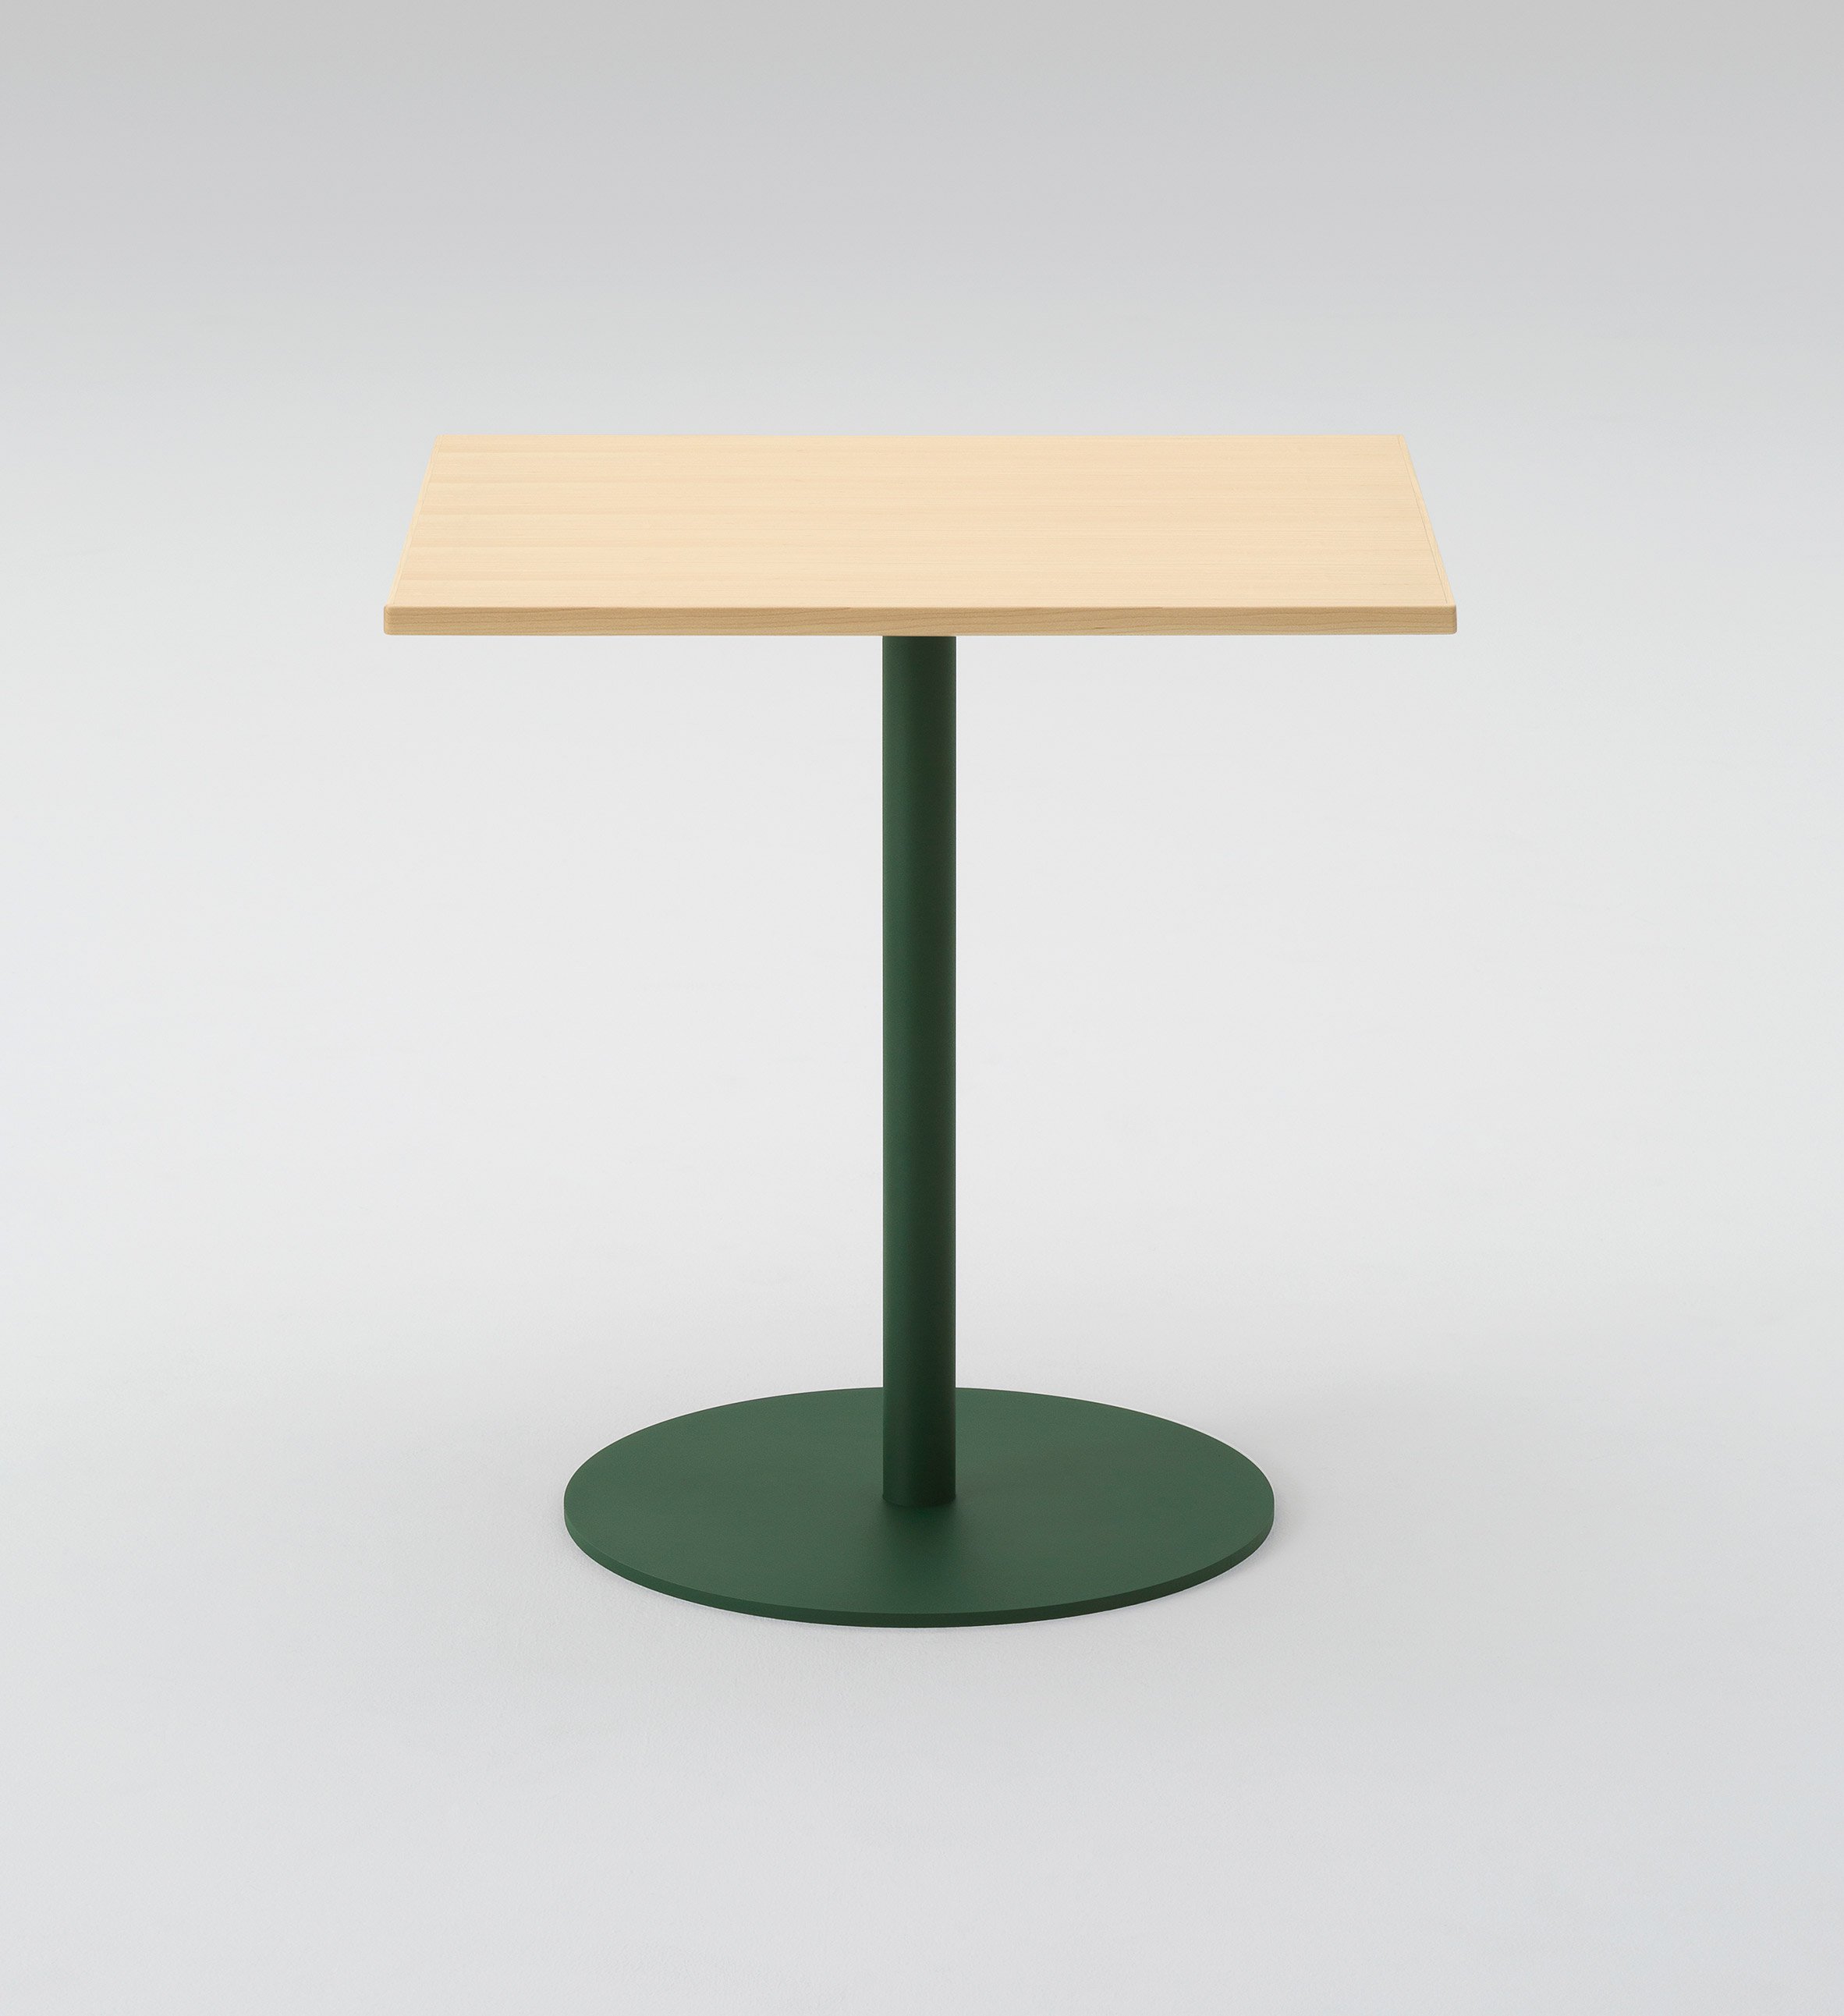 t-o-tables-jasper-morrison-maruni-design-furniture-_dezeen_2364_col_4.jpg